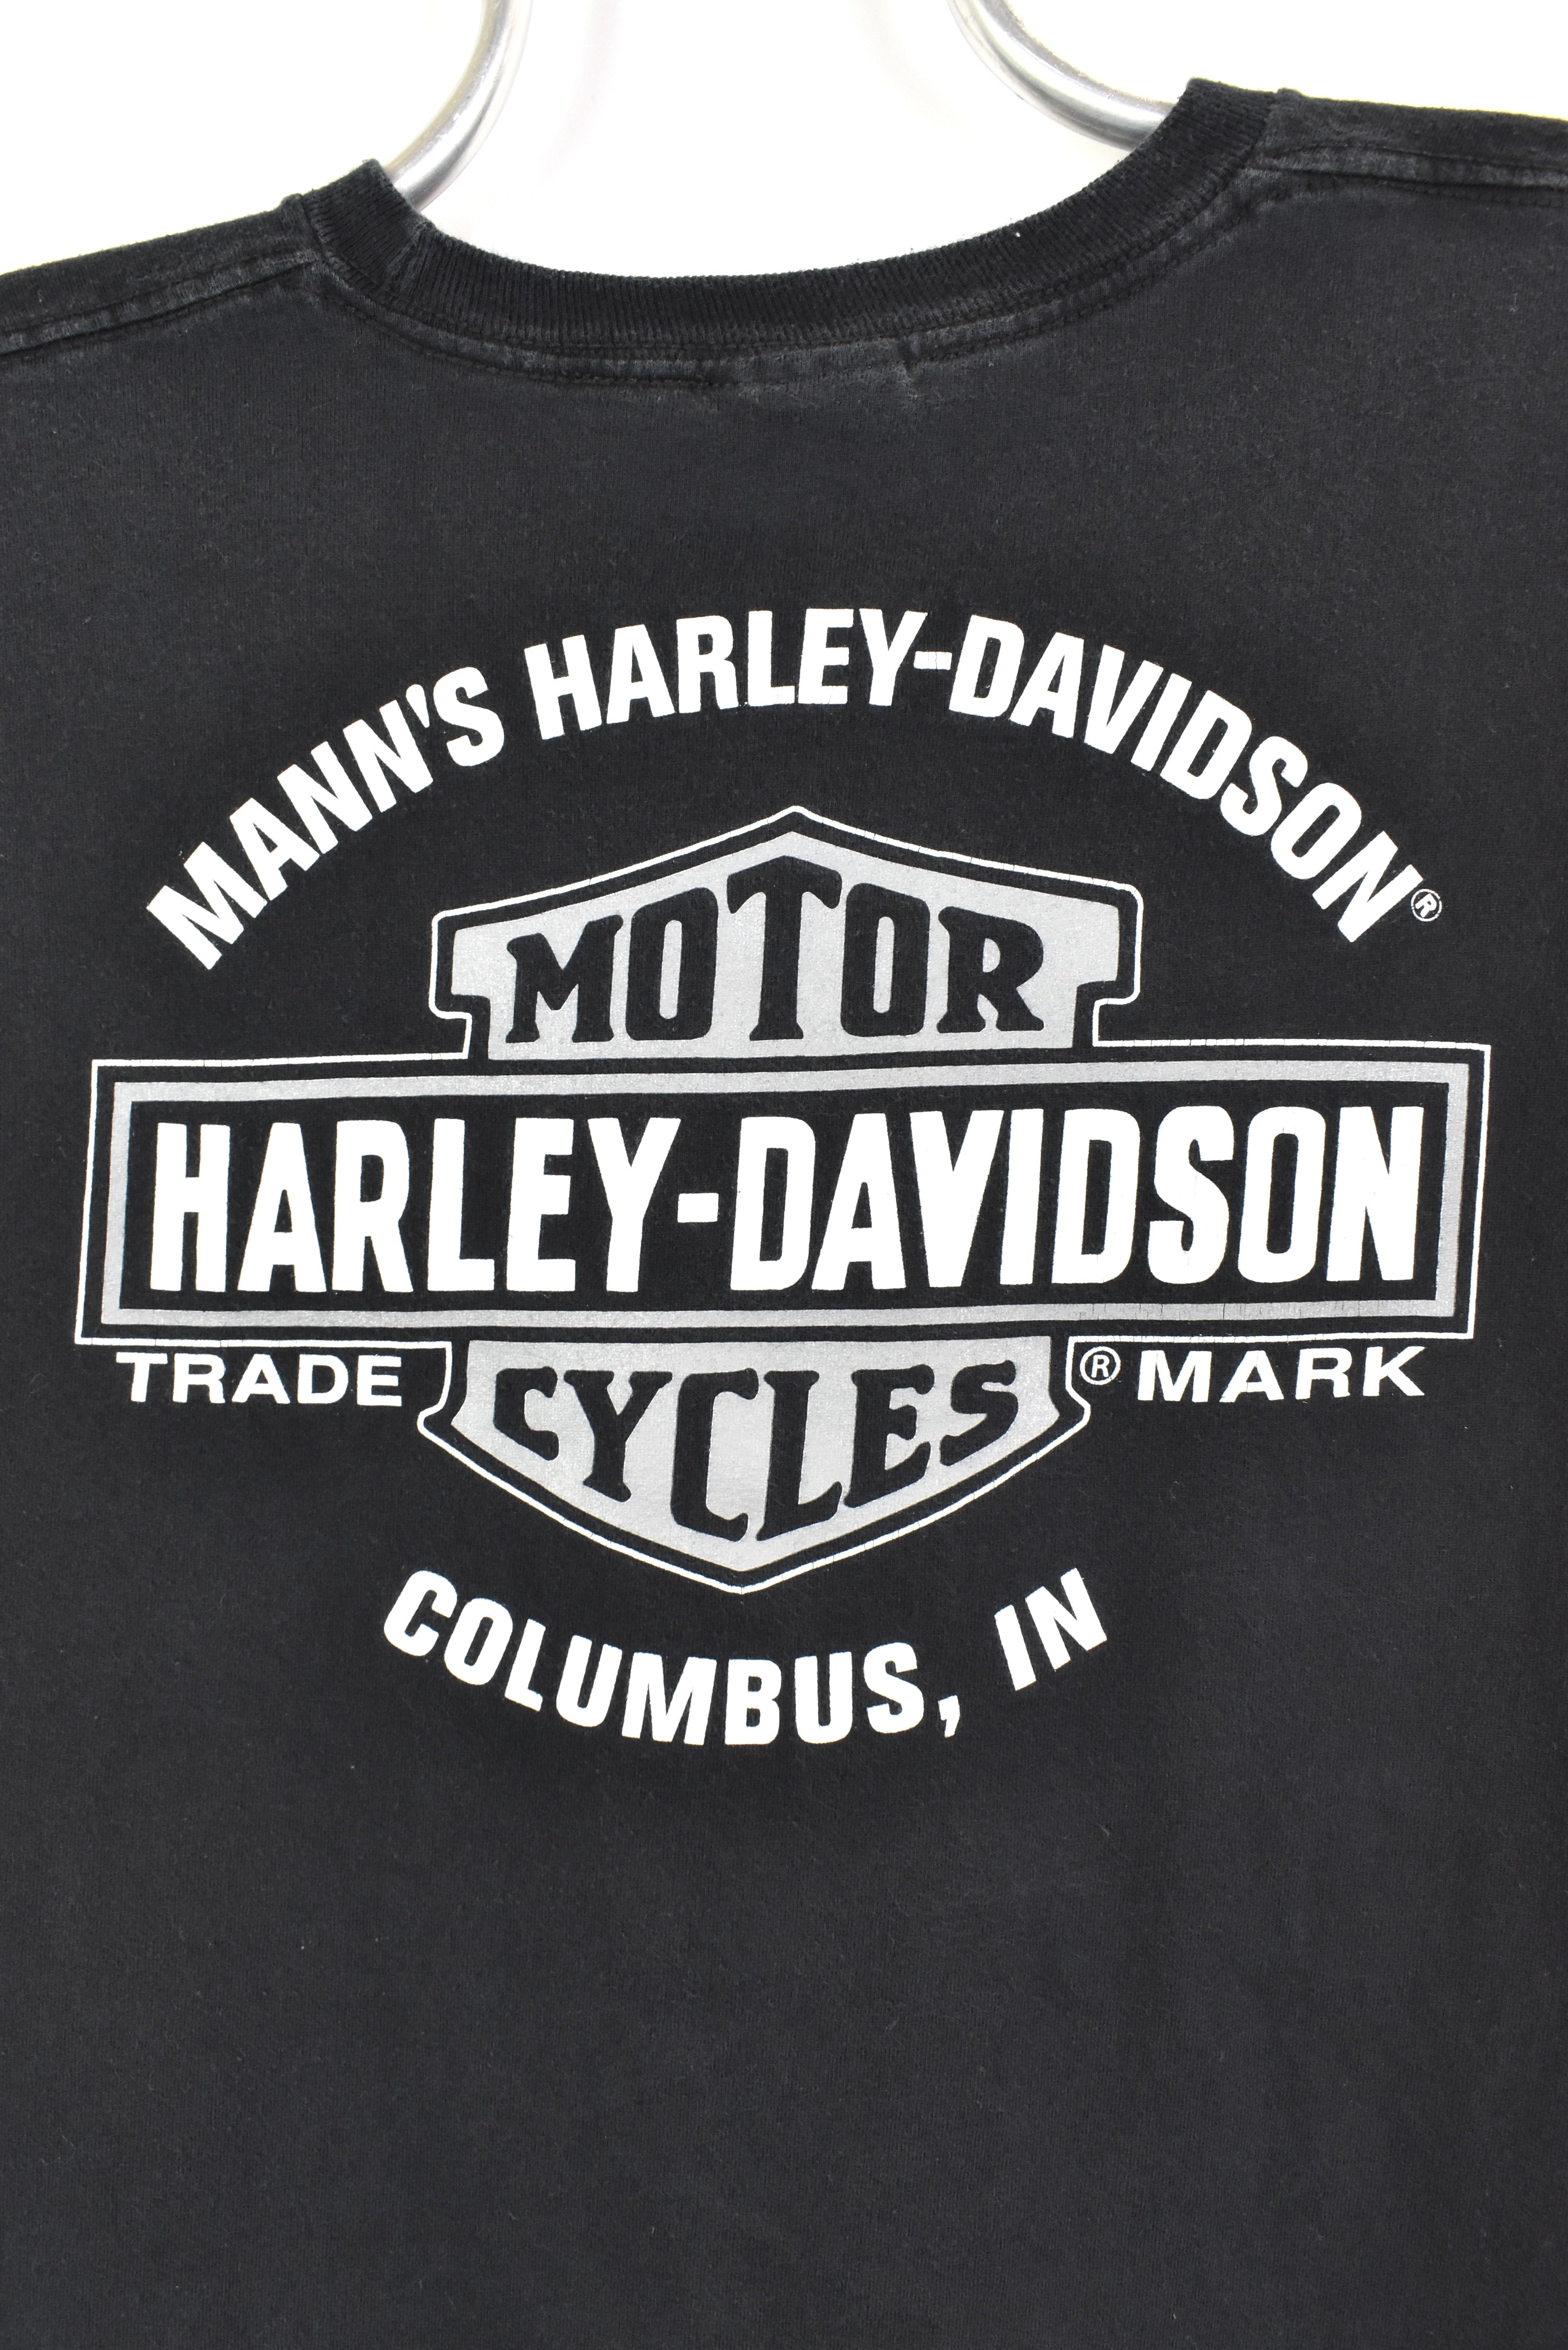 Modern Harley Davidson shirt, 2008 short sleeve graphic tee - XL, black HARLEY DAVIDSON